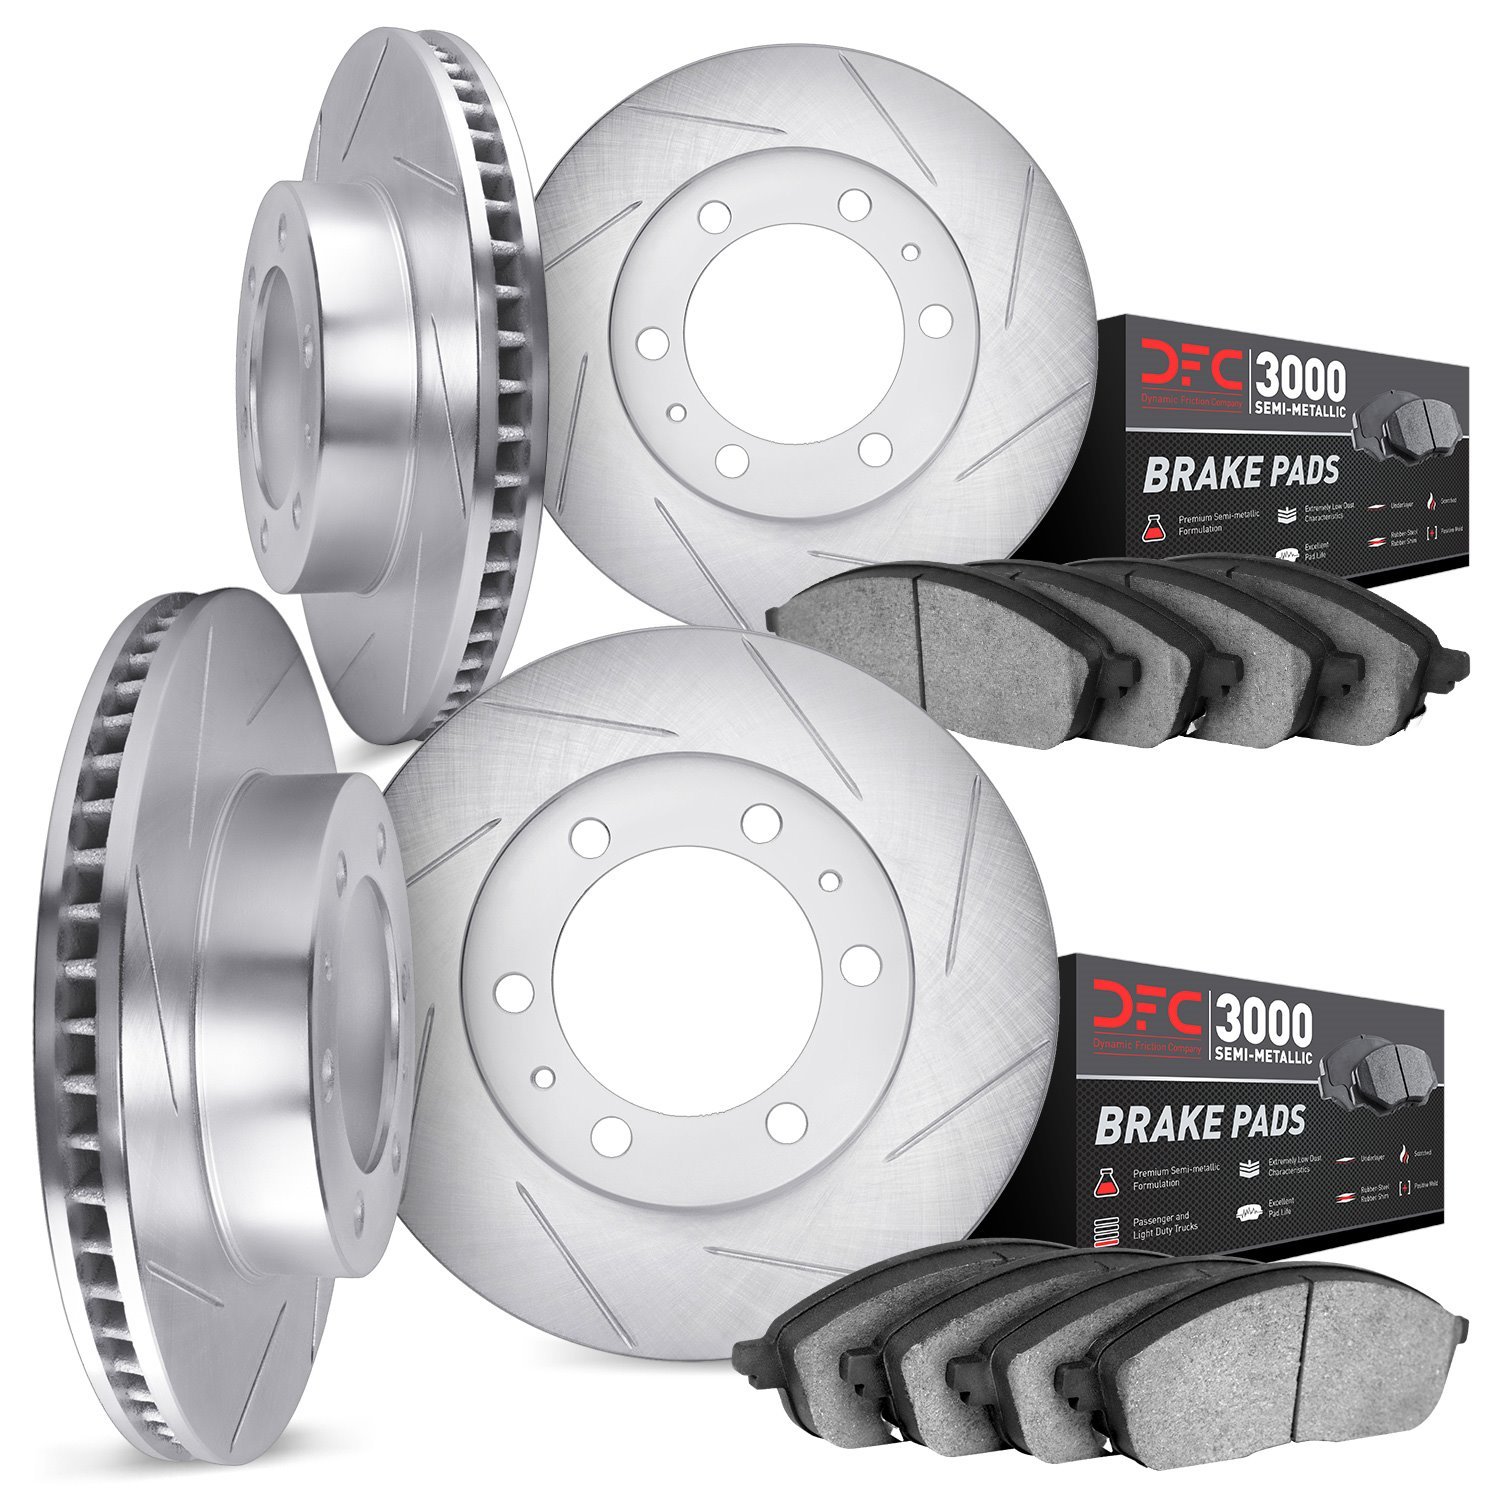 5114-48025 Slotted Brake Rotors with 3000-Series Semi-Metallic Brake Pads Kit & Hardware [Silver], 2007-2008 GM, Position: Front